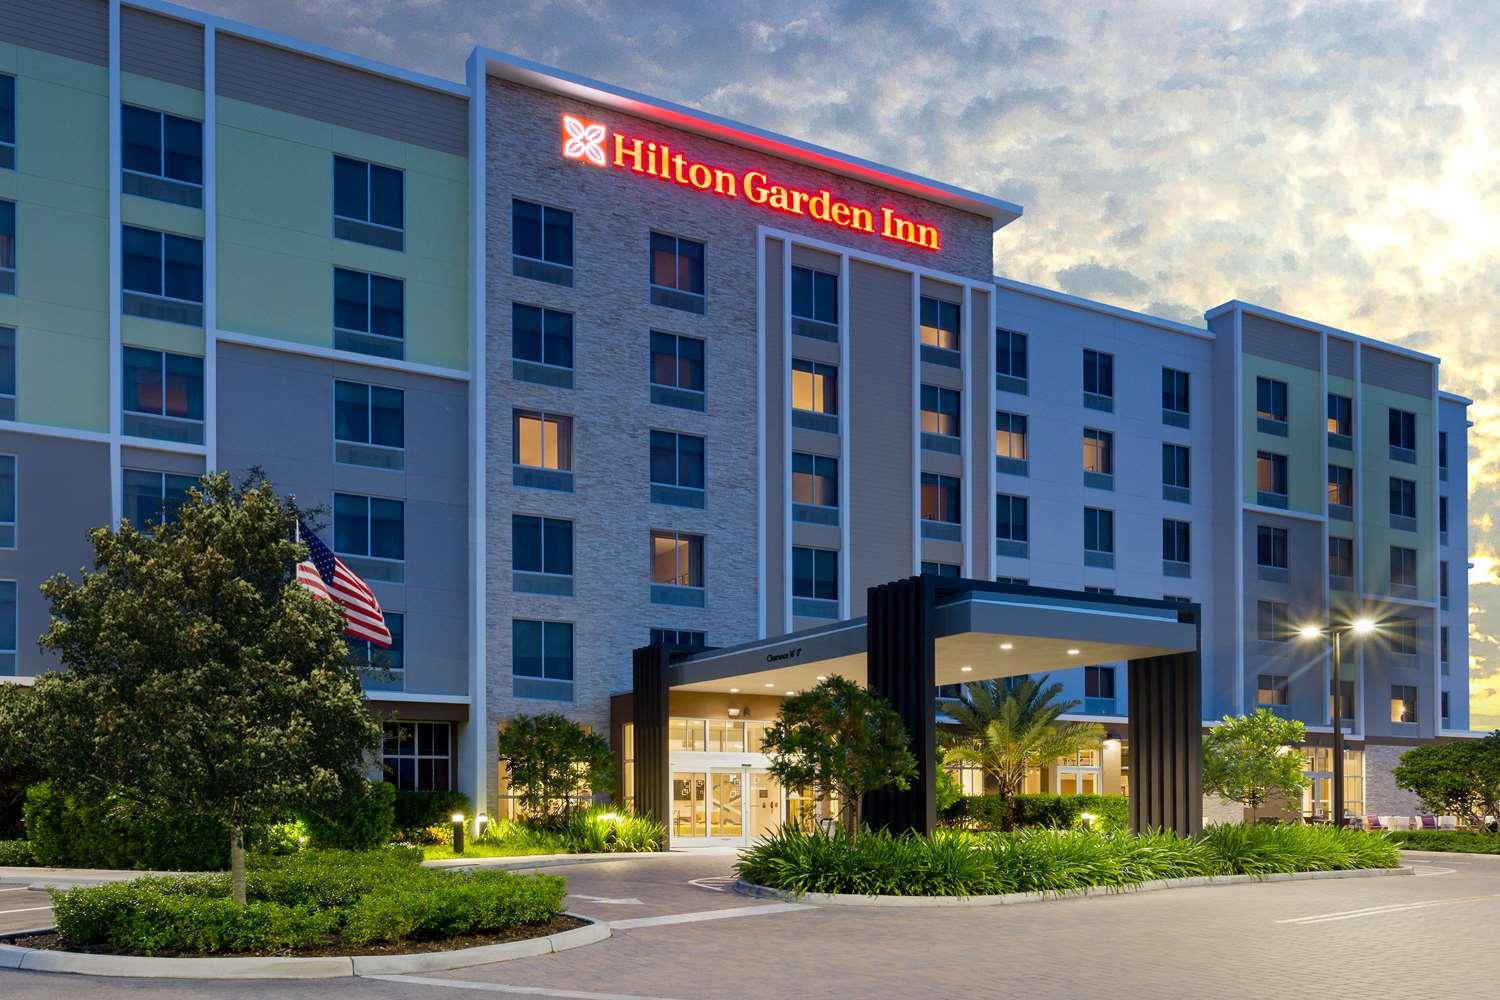 Hilton Garden Inn Homestead in Homestead, FL